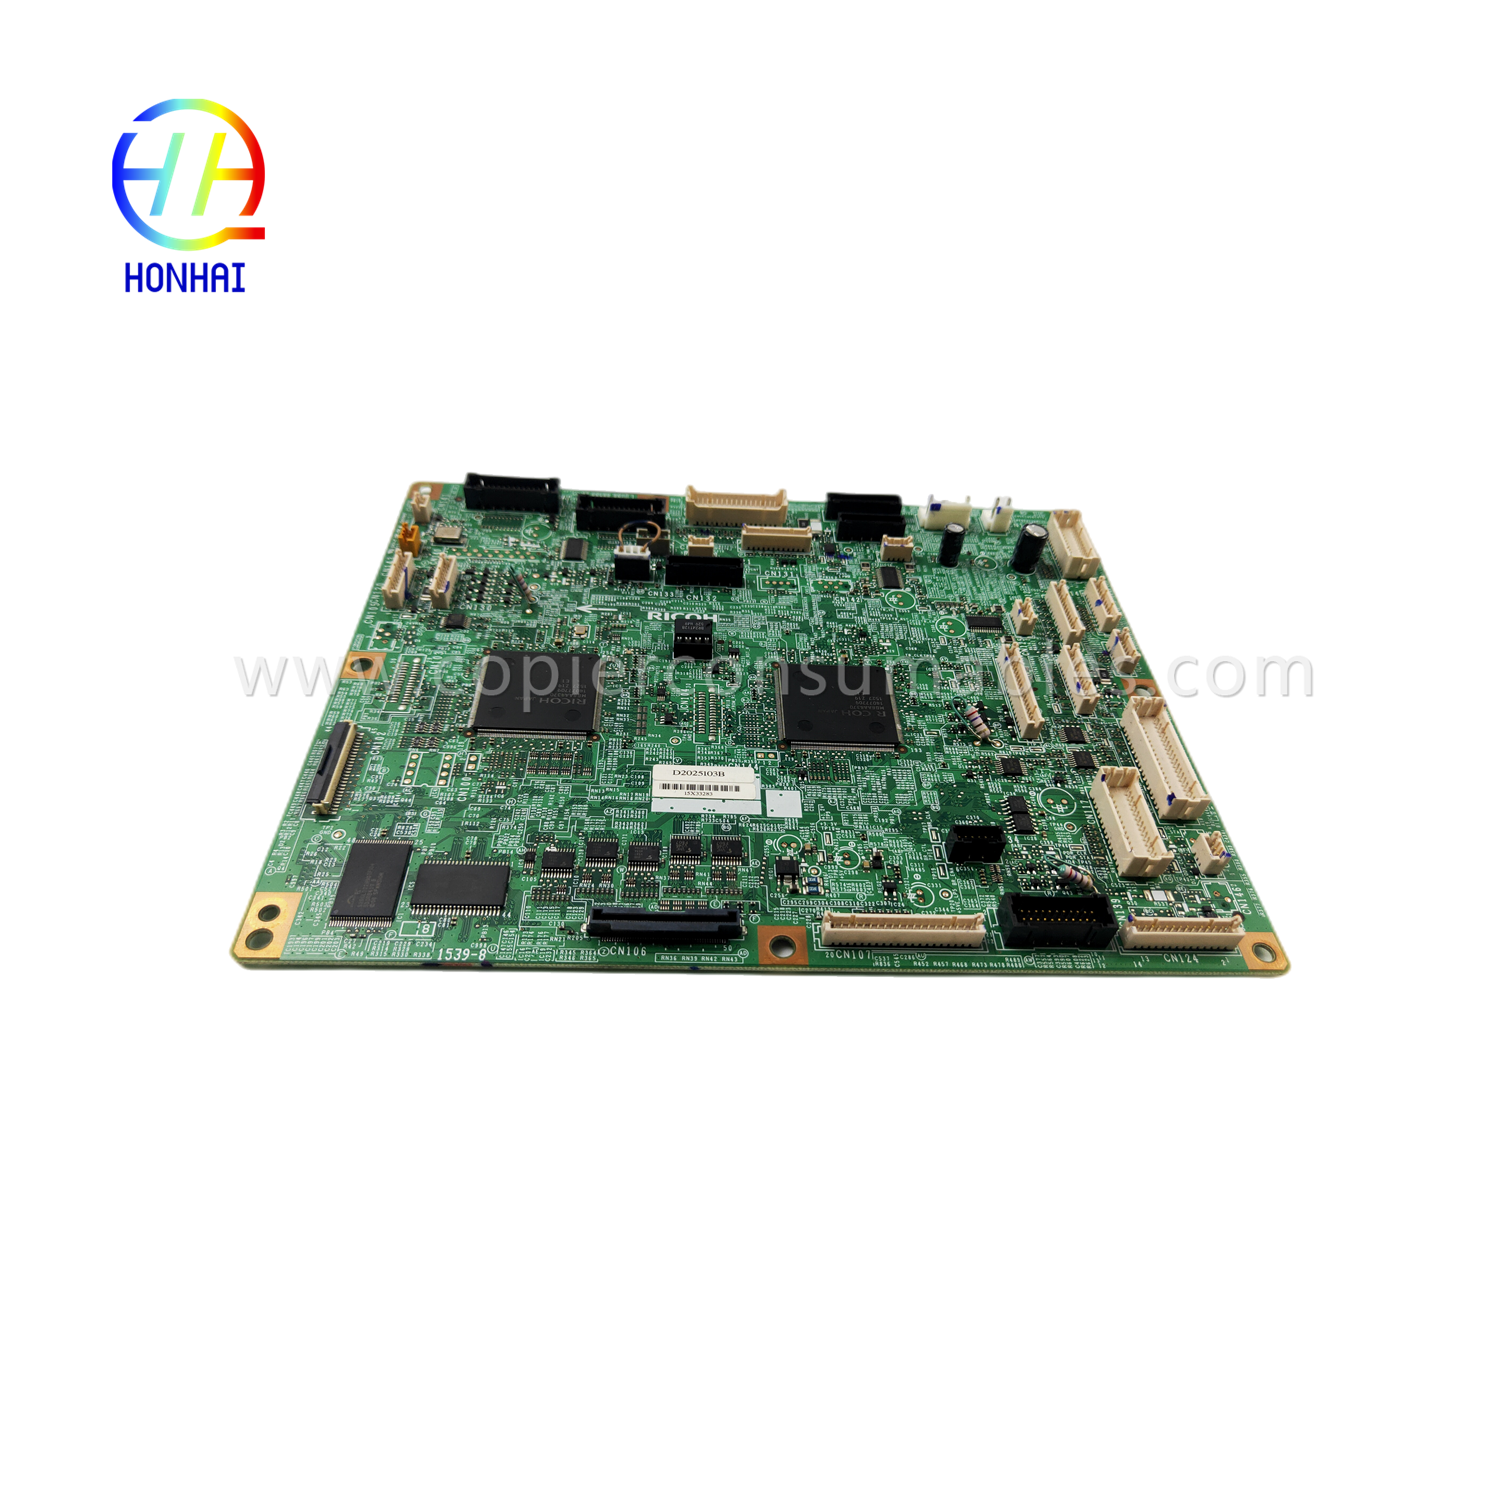 https://www.copierconsumables.com/bicu-board-for-ricoh-3045-3035-lanier-ld235-ld245-savin-4035-4045-bicu-board-assembly-product/